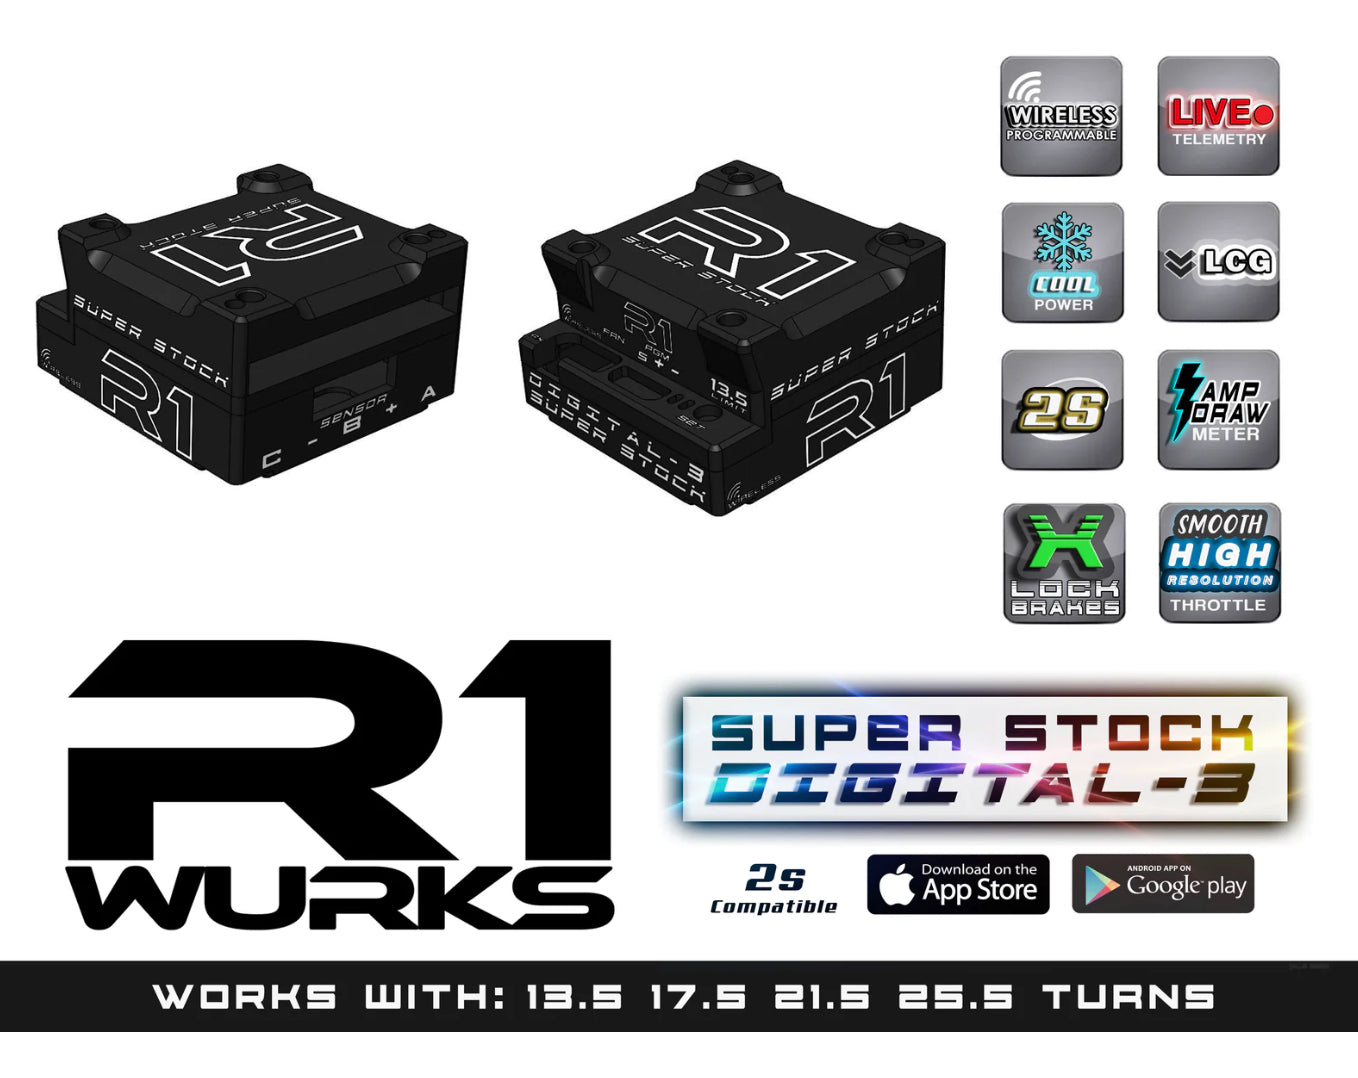 R1 Wurks "Super Stock" 2S Digital 3 ESC 040013 Now Shipping!!